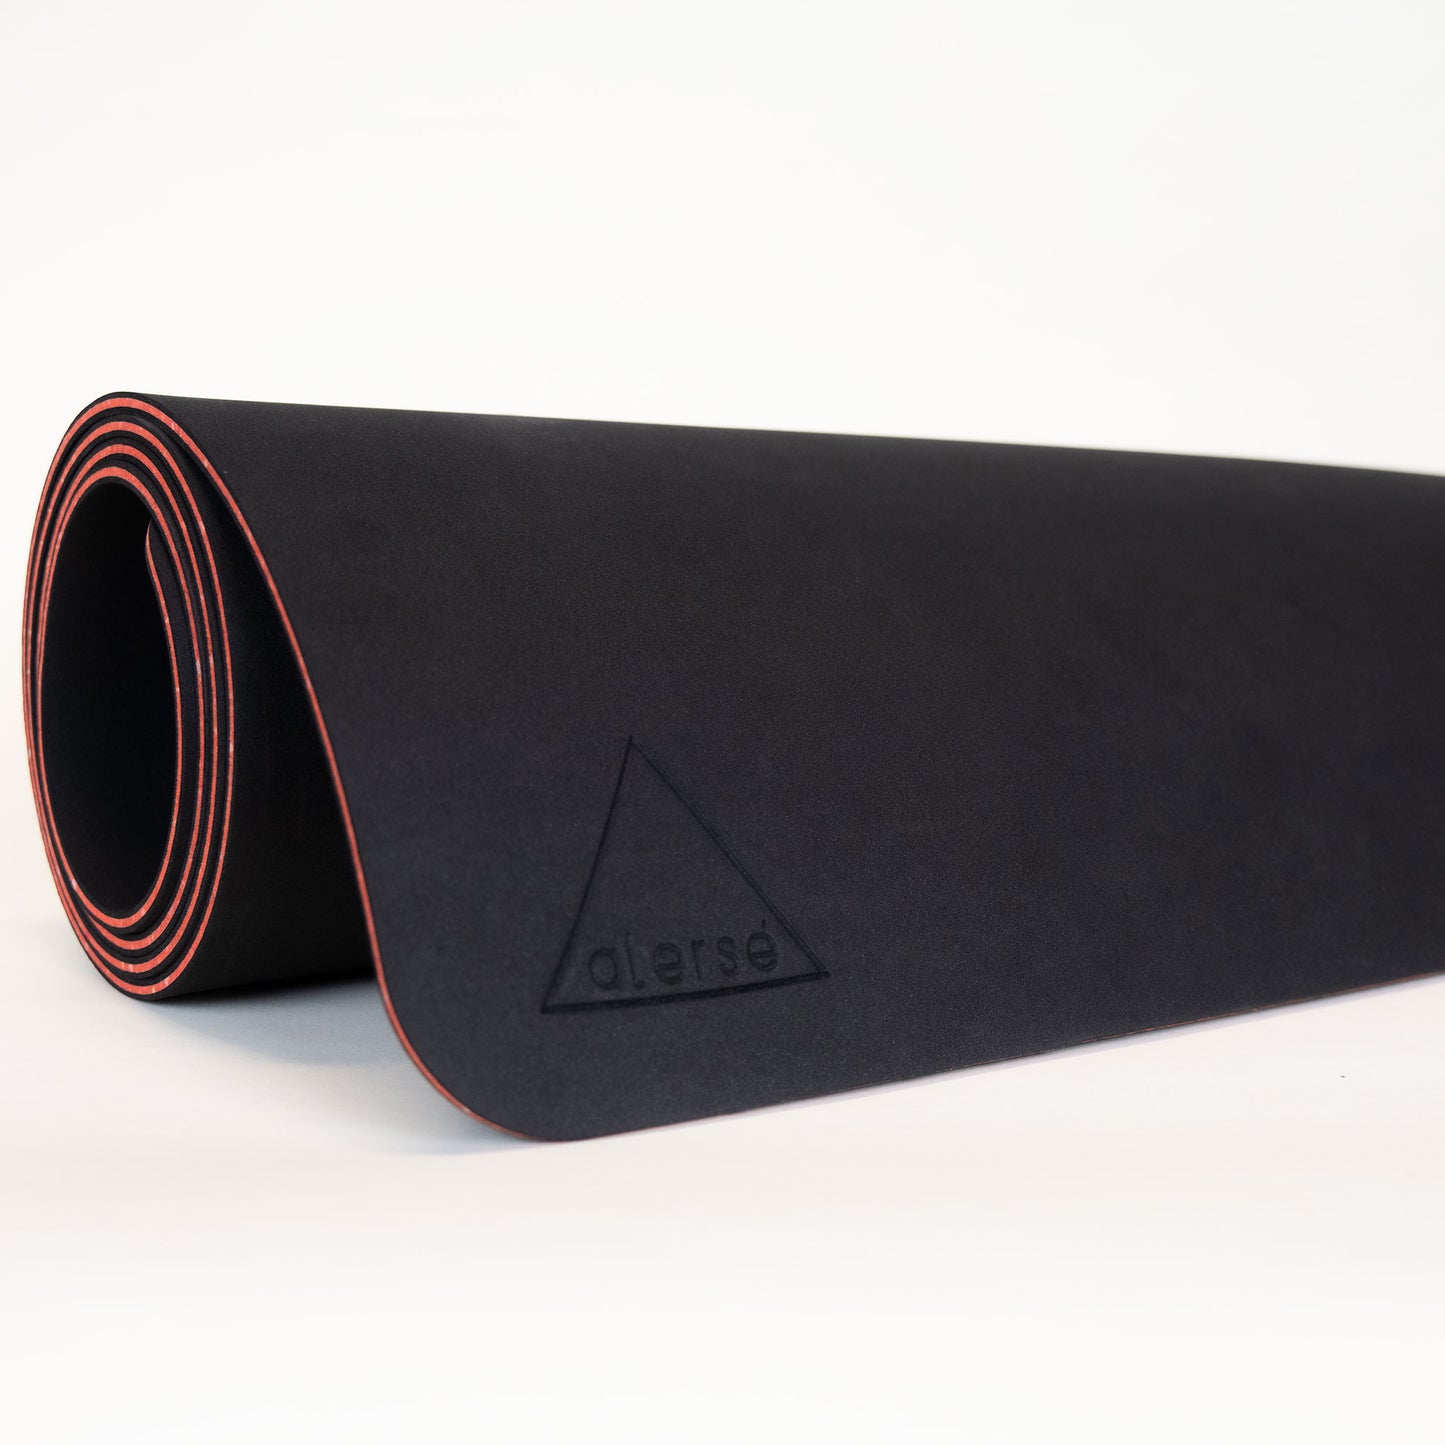 NEW!! Alerse LIGHT Yoga Mat - Premium 6mm thick, 2.5lbs. - Midnight (Matte Black)